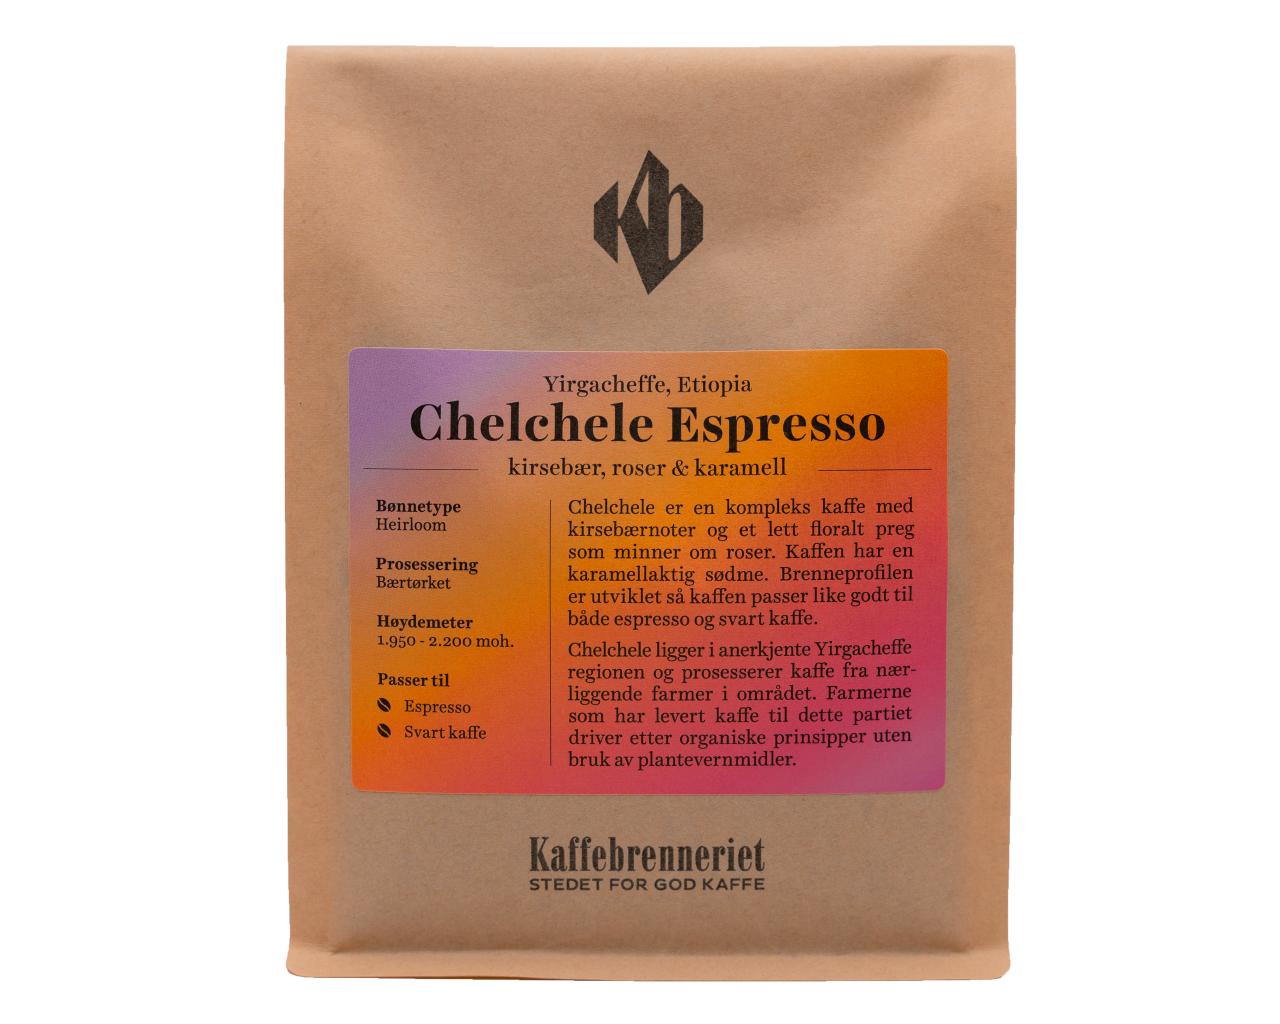 Chelchele Espresso